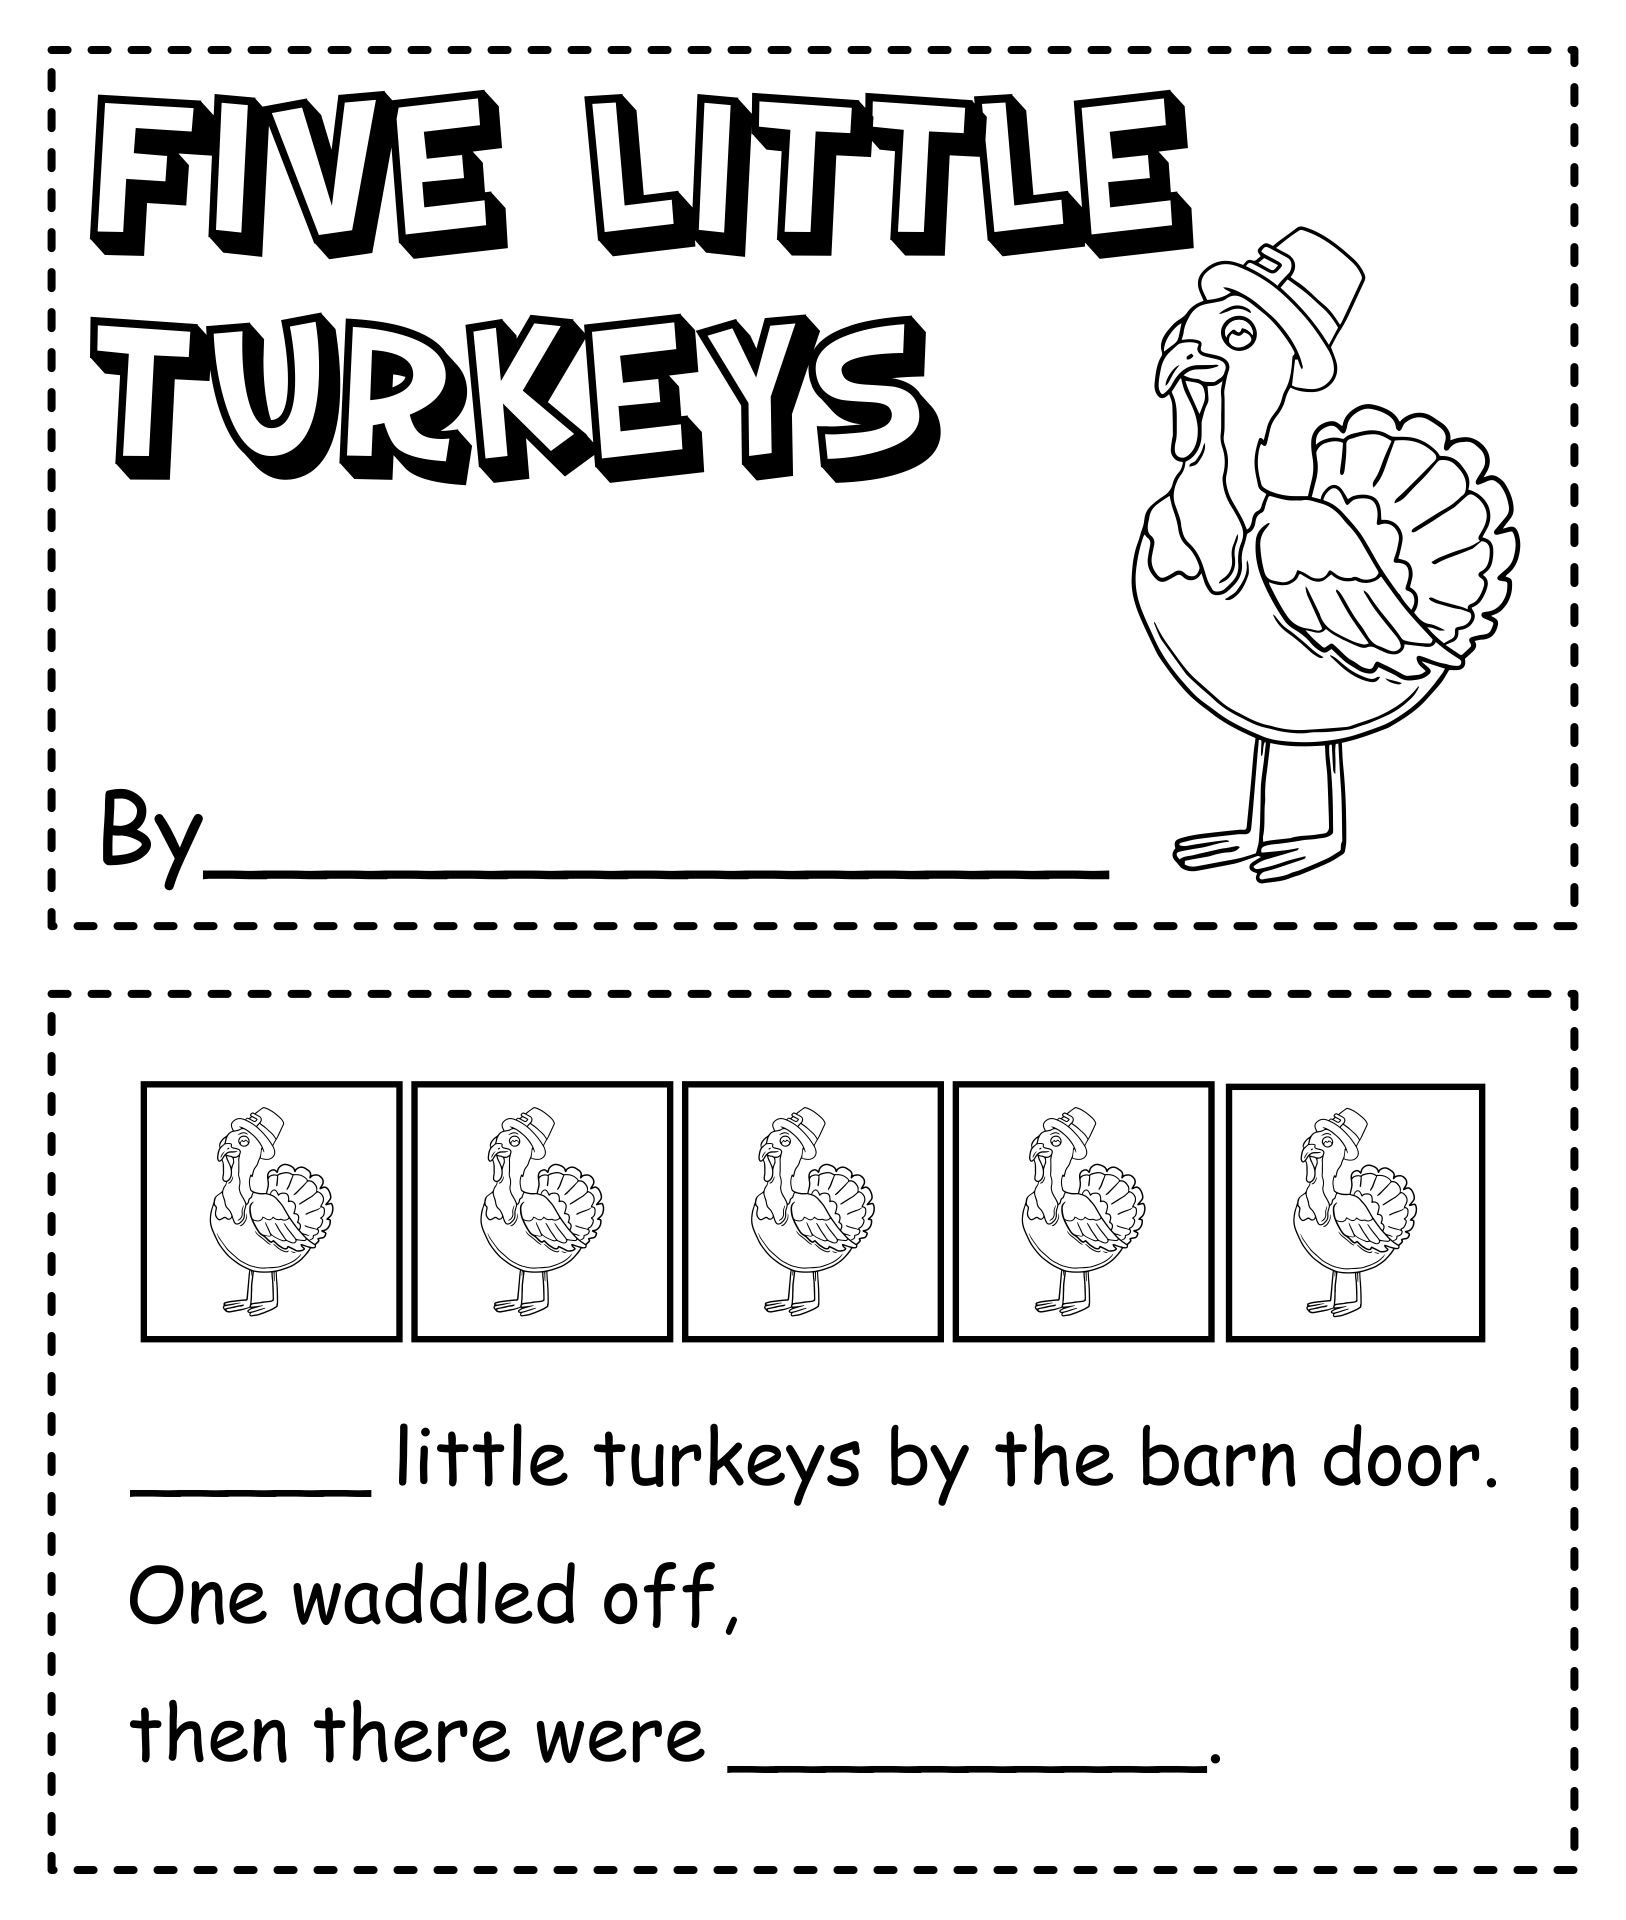 5 Little Turkeys Printable Book